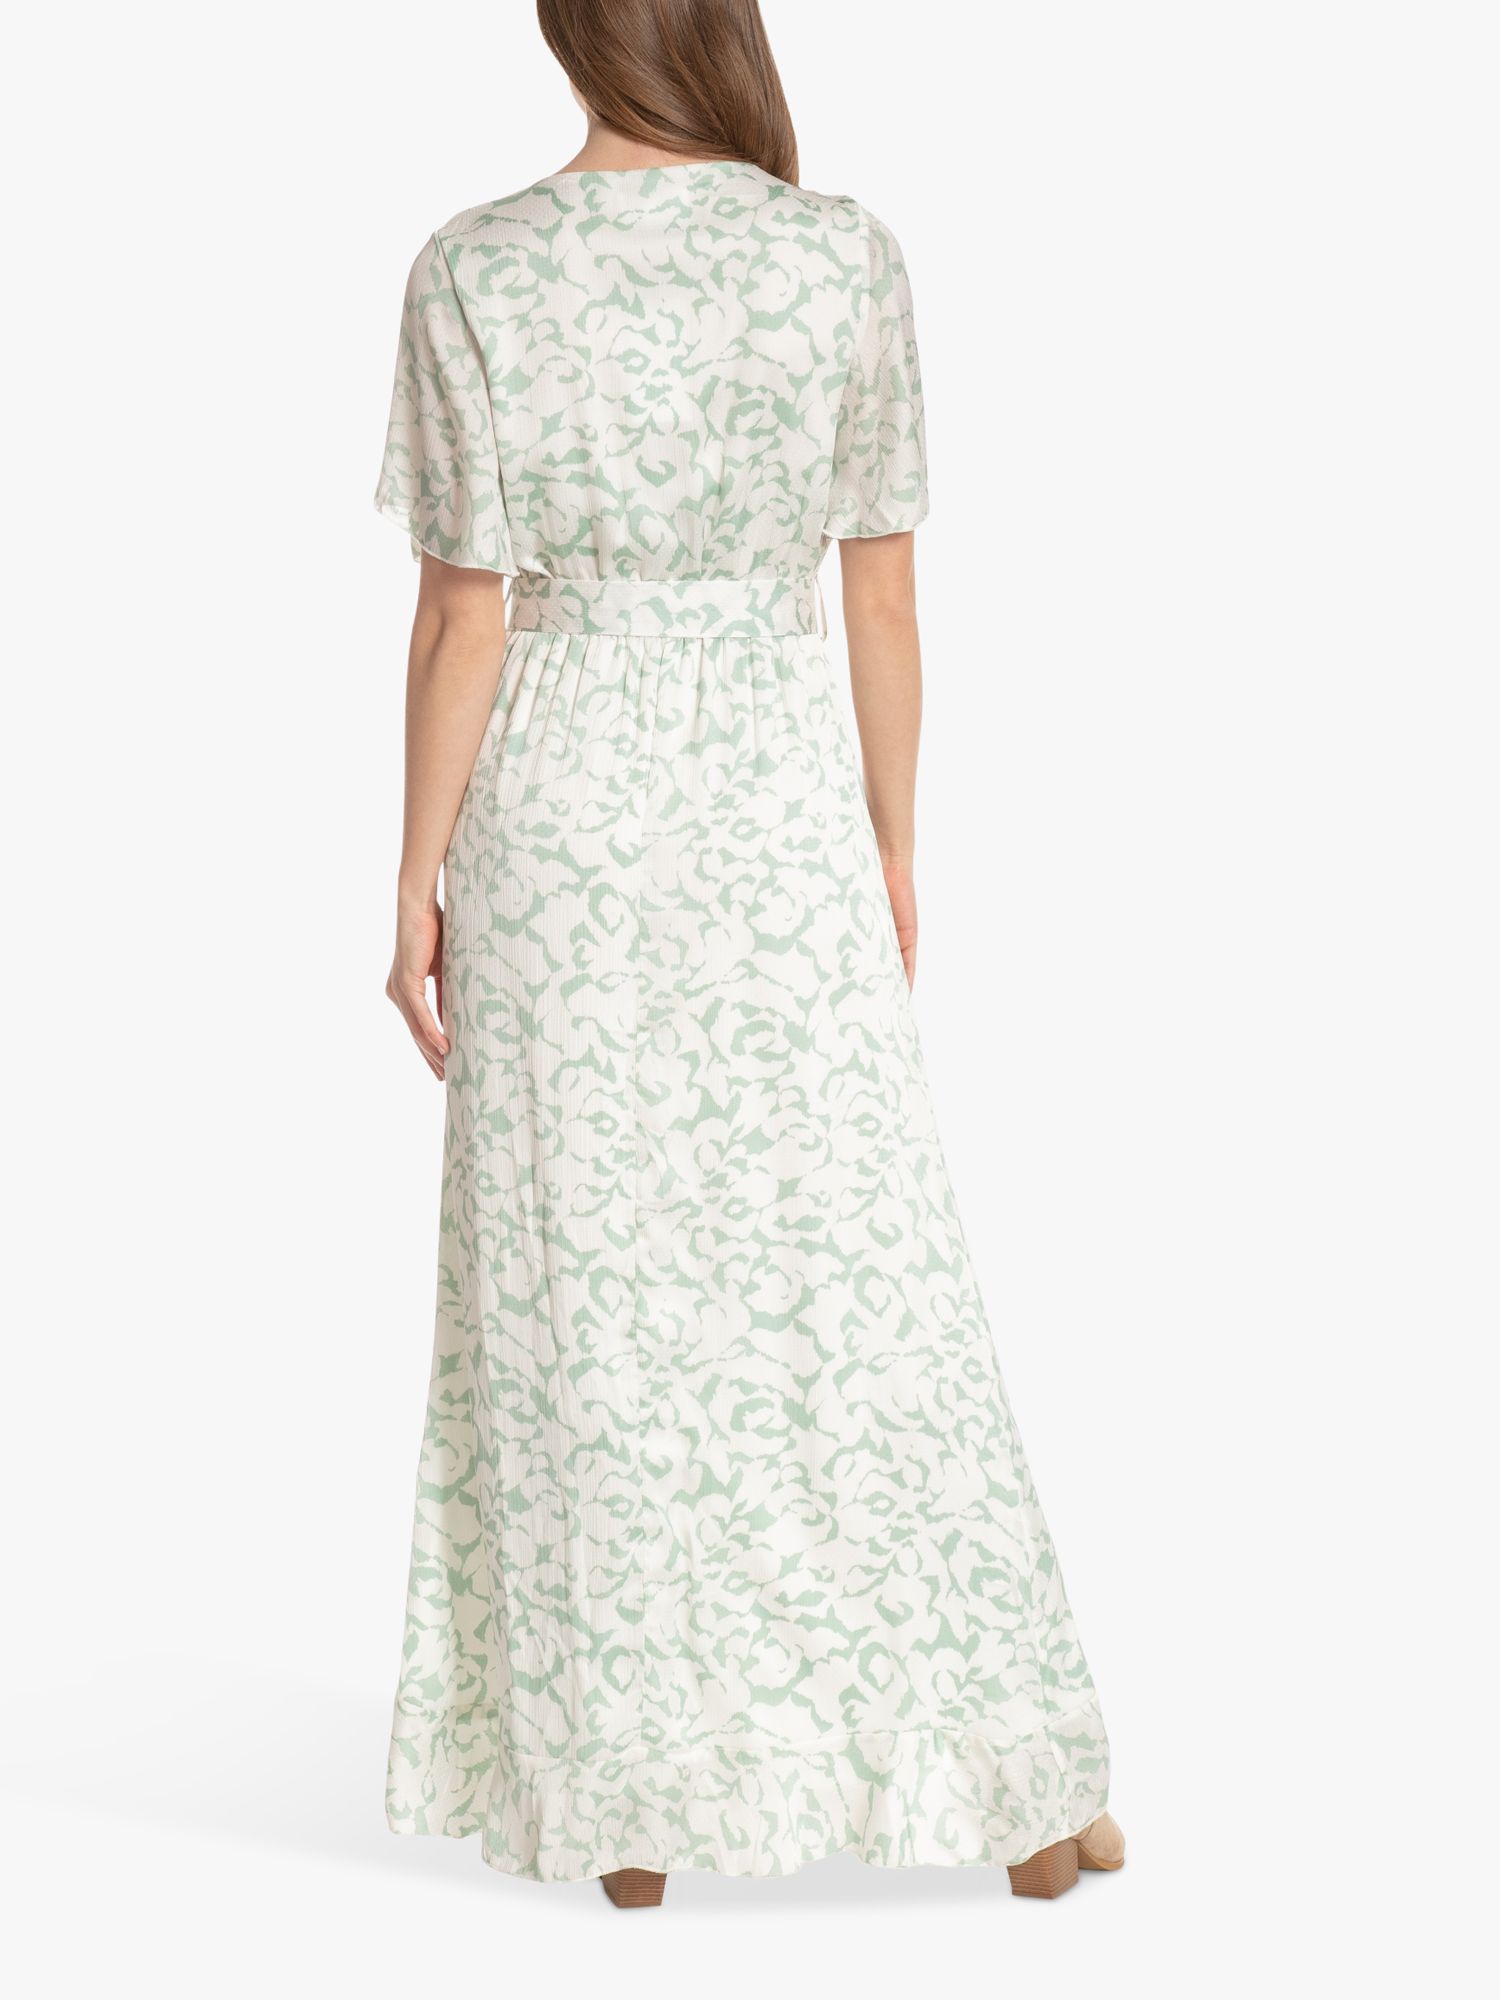 Sisters Point Floral Print Maxi Wrap Dress, Light Green/White, XS